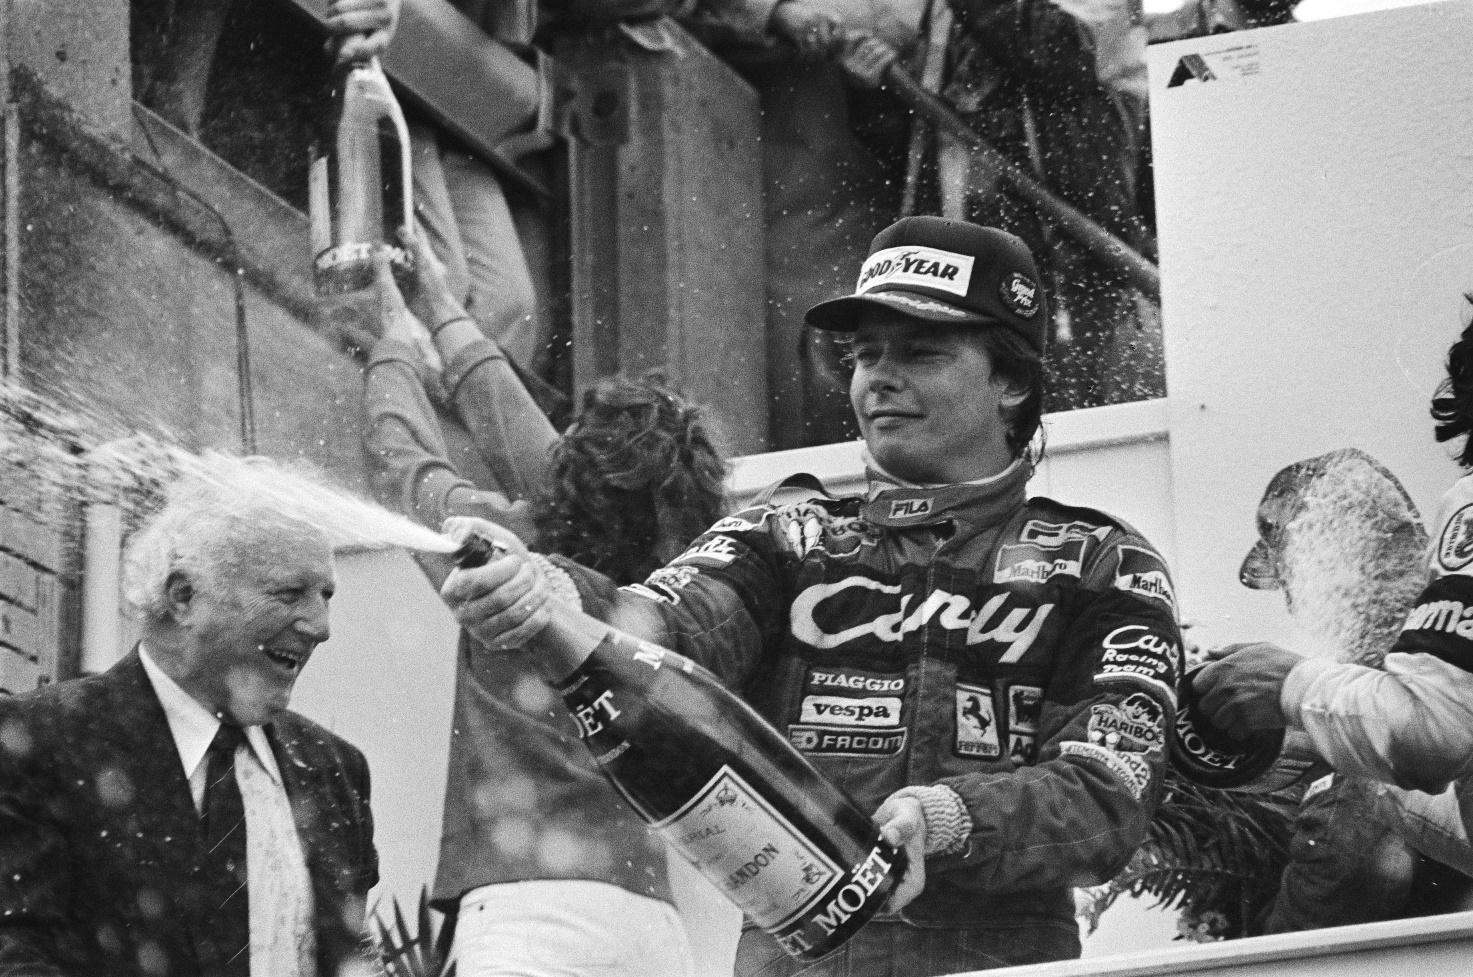 Pironi celebrating at the 1982 Dutch Grand Prix.